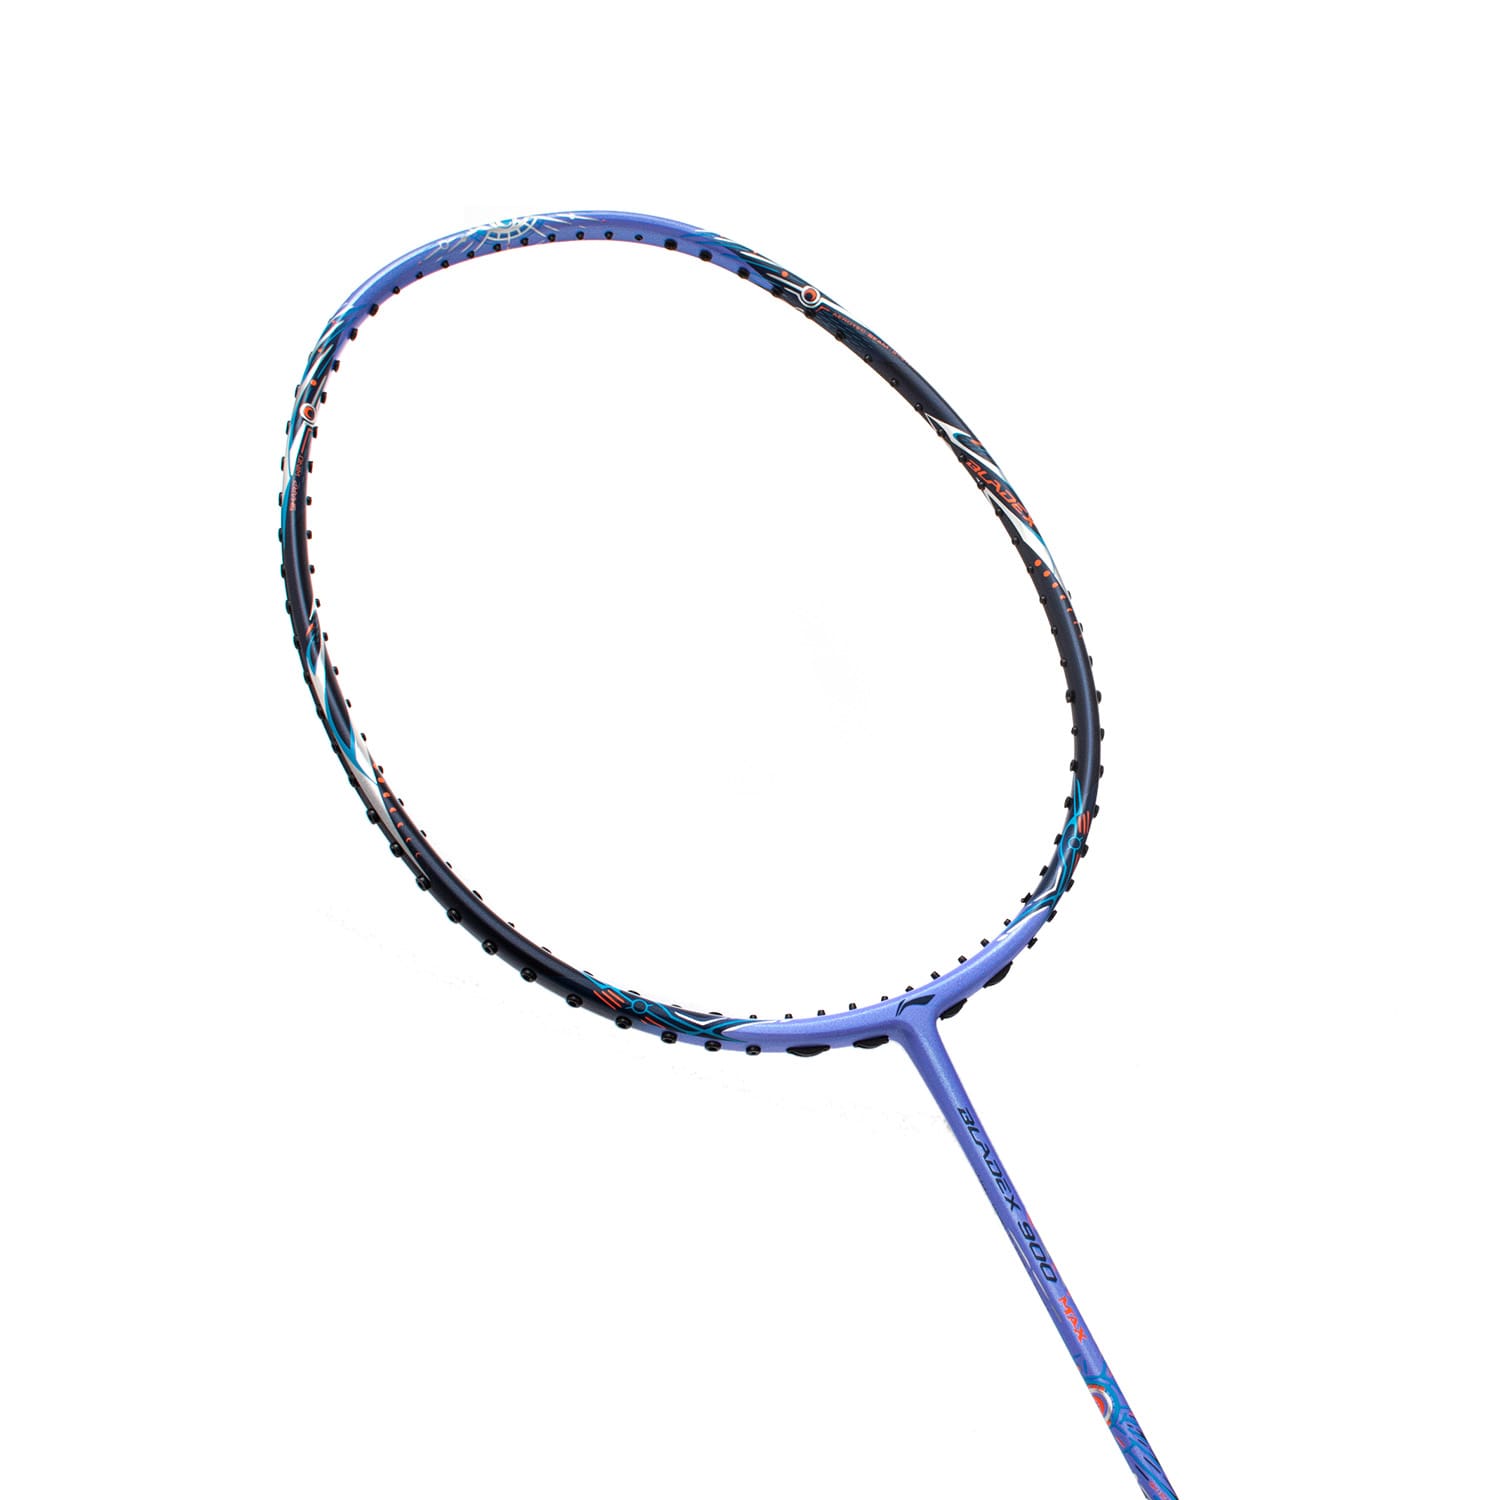 Li-Ning Bladex 900 Moon Max (4U) Badmintonschläger - Unbesaitet